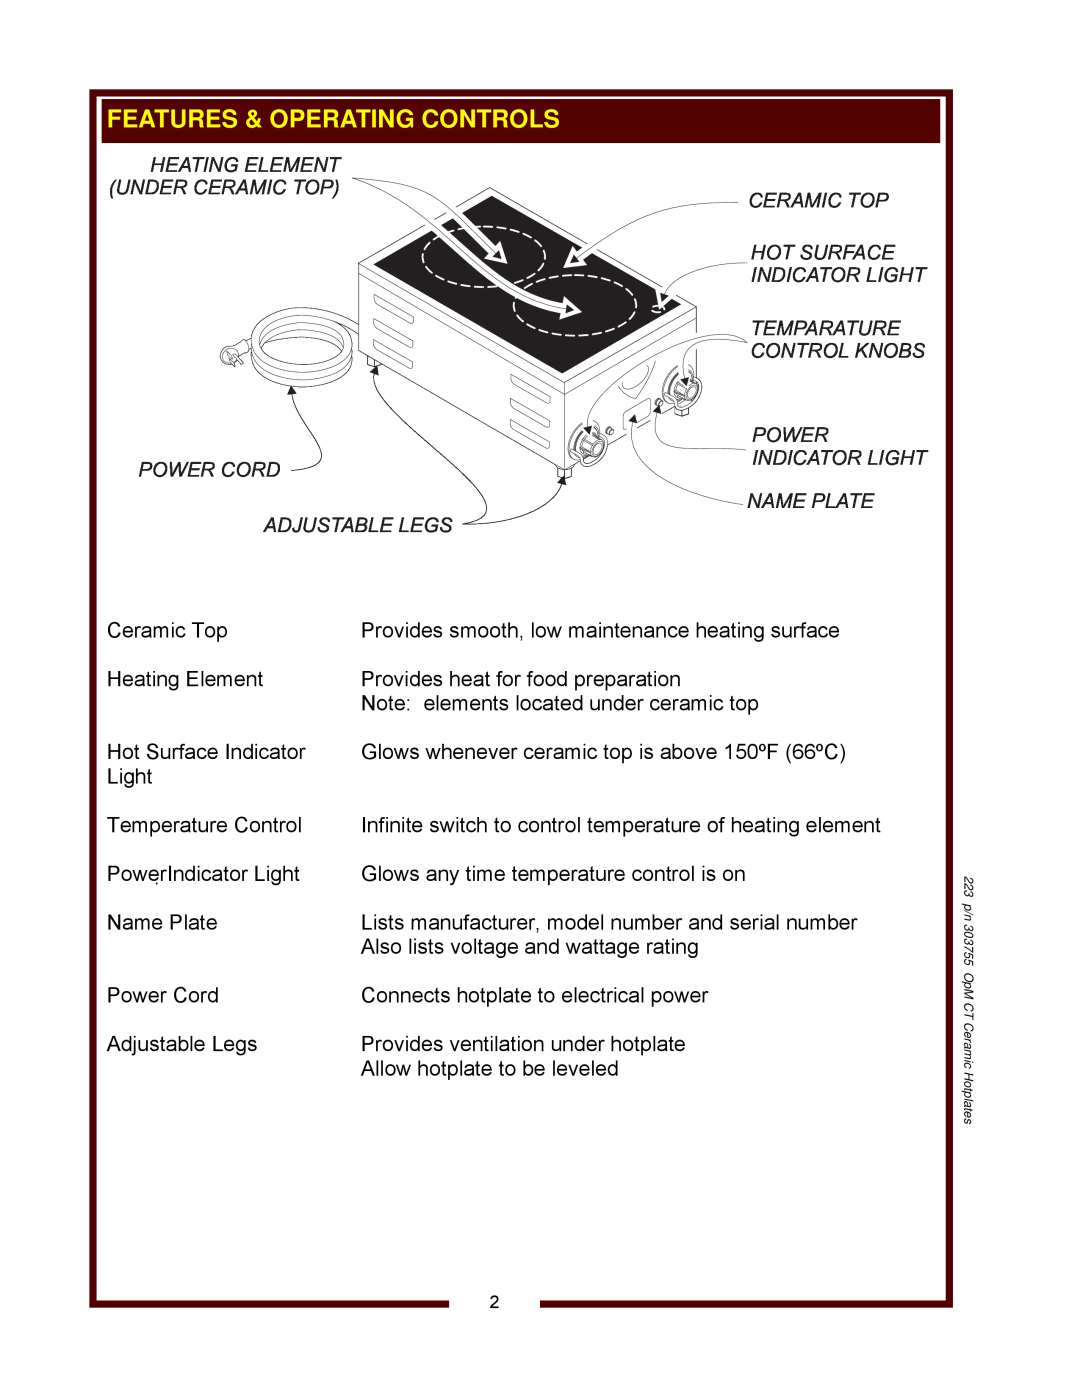 Wells HC-100, HC-125, HC-225 Heating Element Under Ceramic Top Power Cord Adjustable Legs, Power Indicator Light Name Plate 